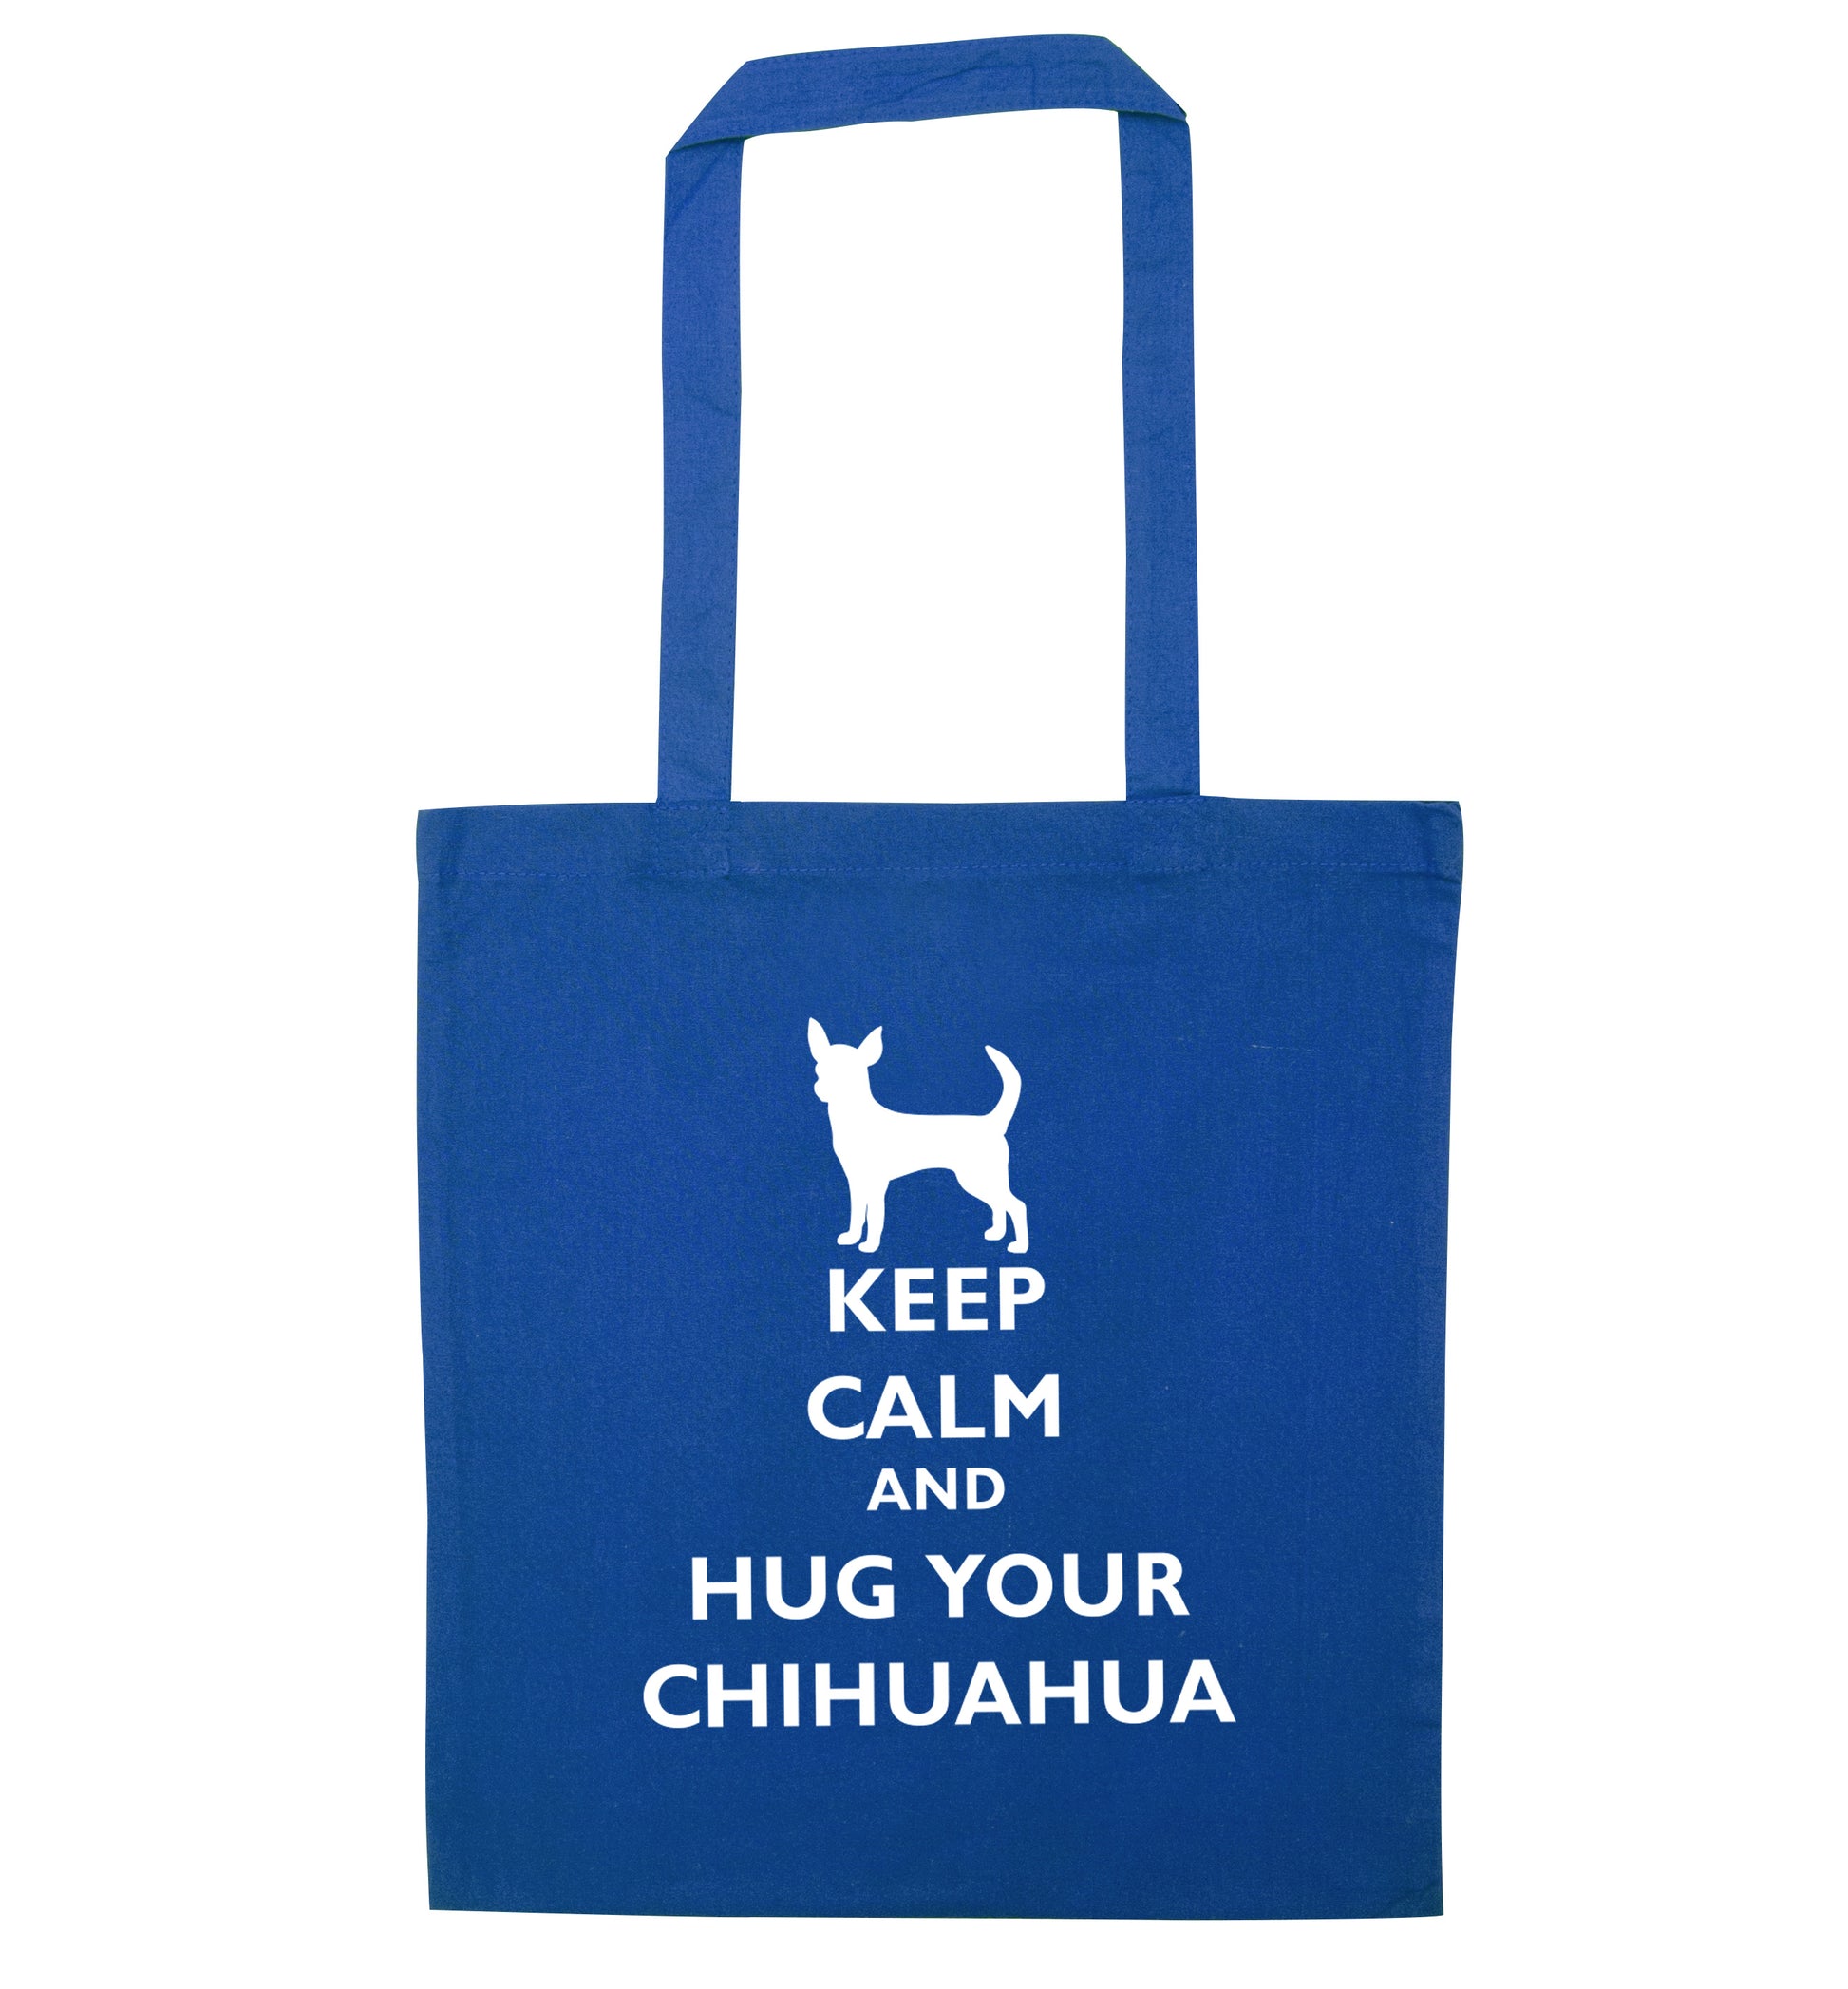 Keep calm and hug your chihuahua blue tote bag